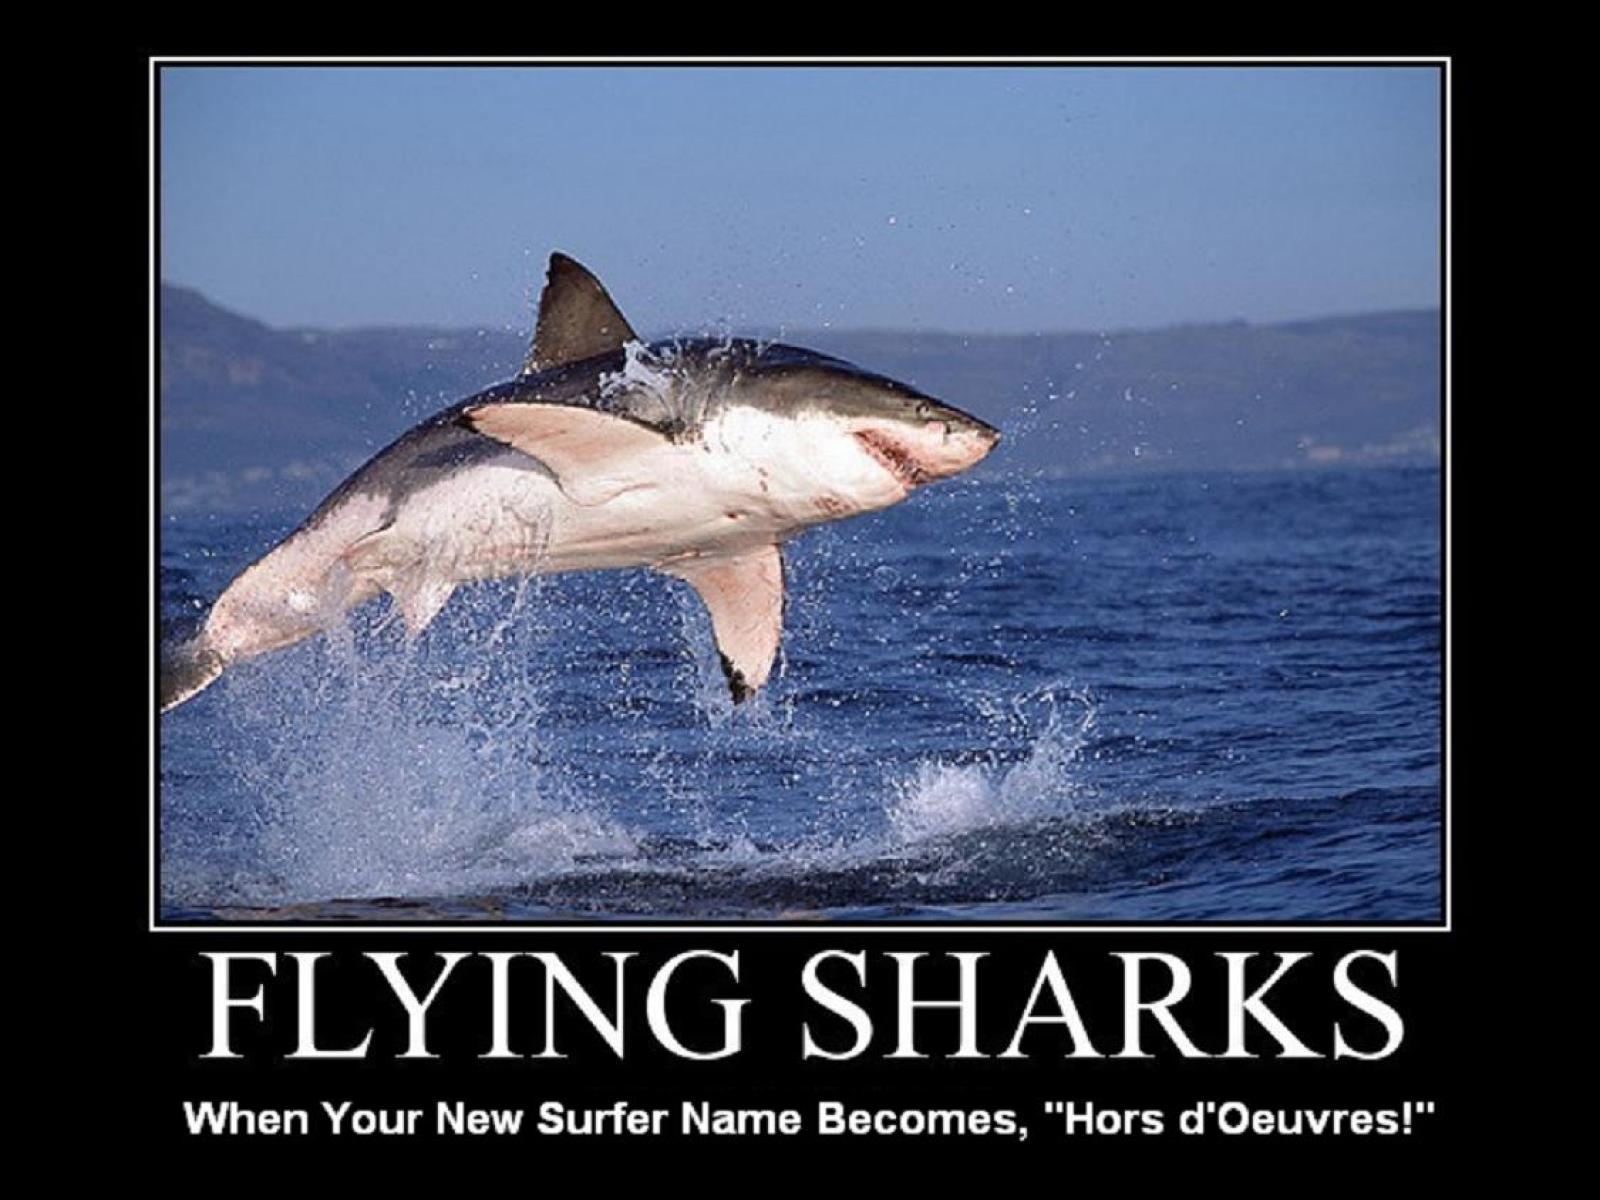 Funny Flying Sharks Poster